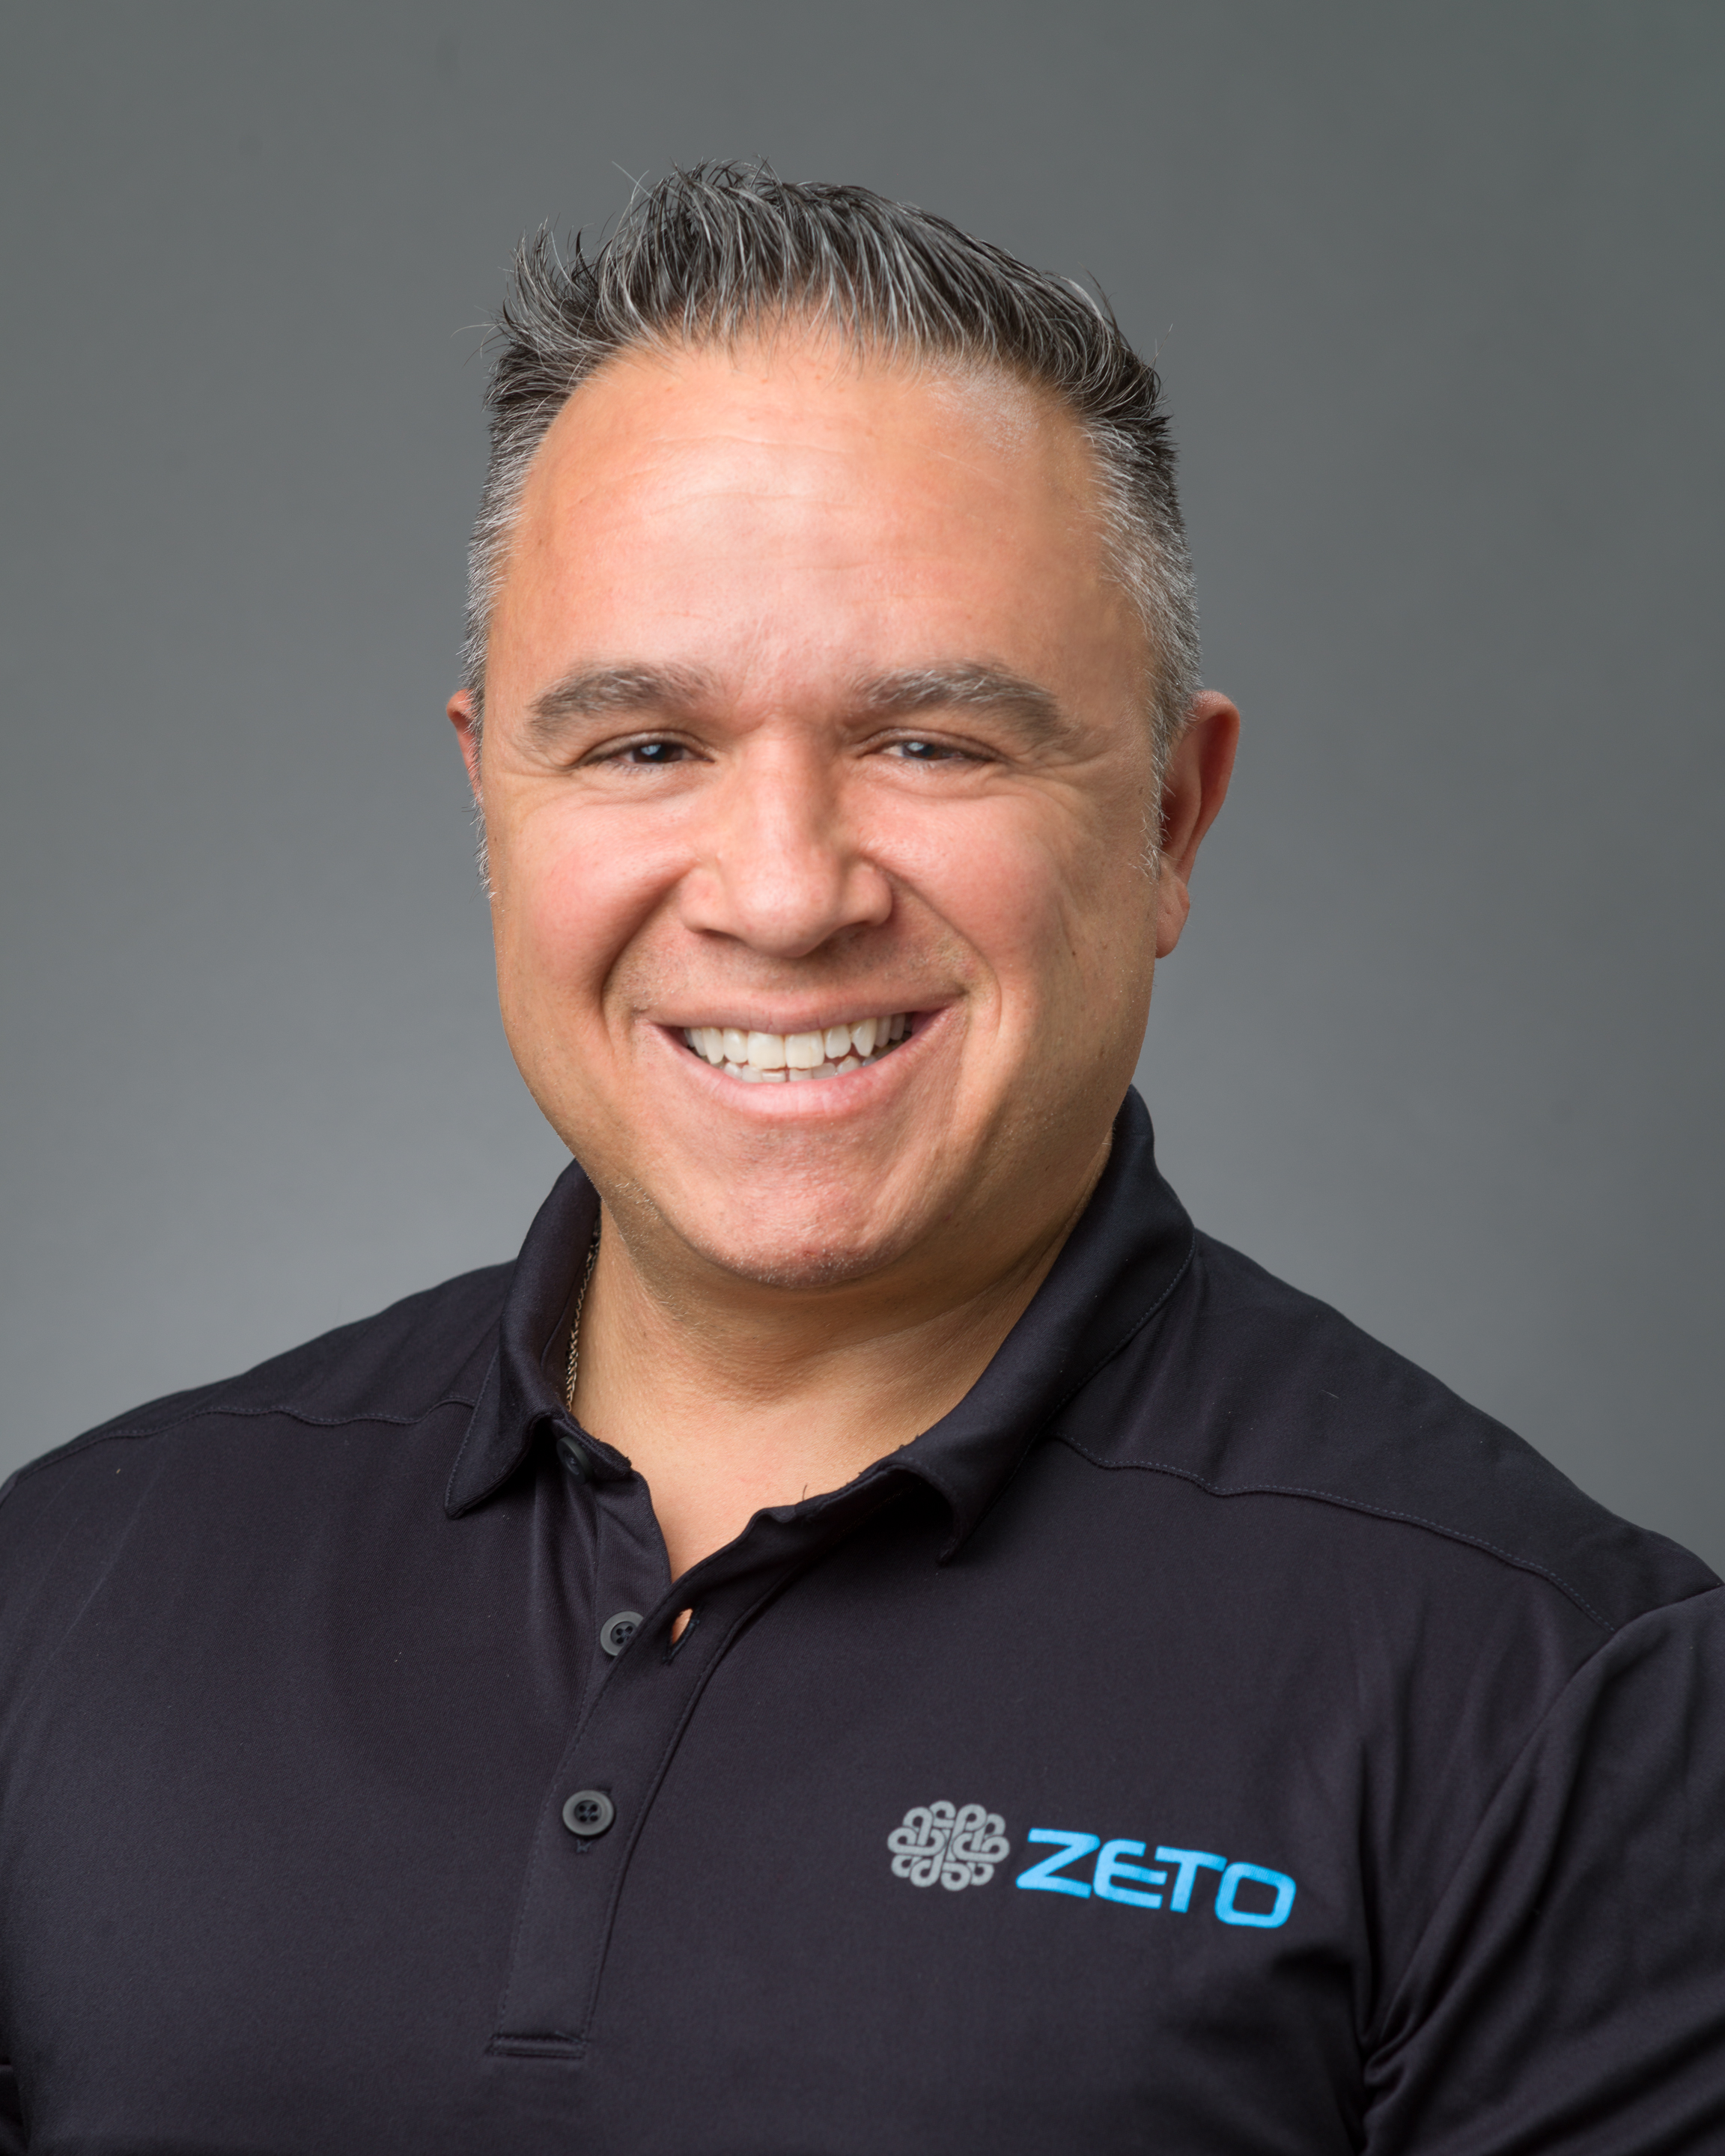 FARUK OKCETIN | Zeto Wireless EEG Company Team Member